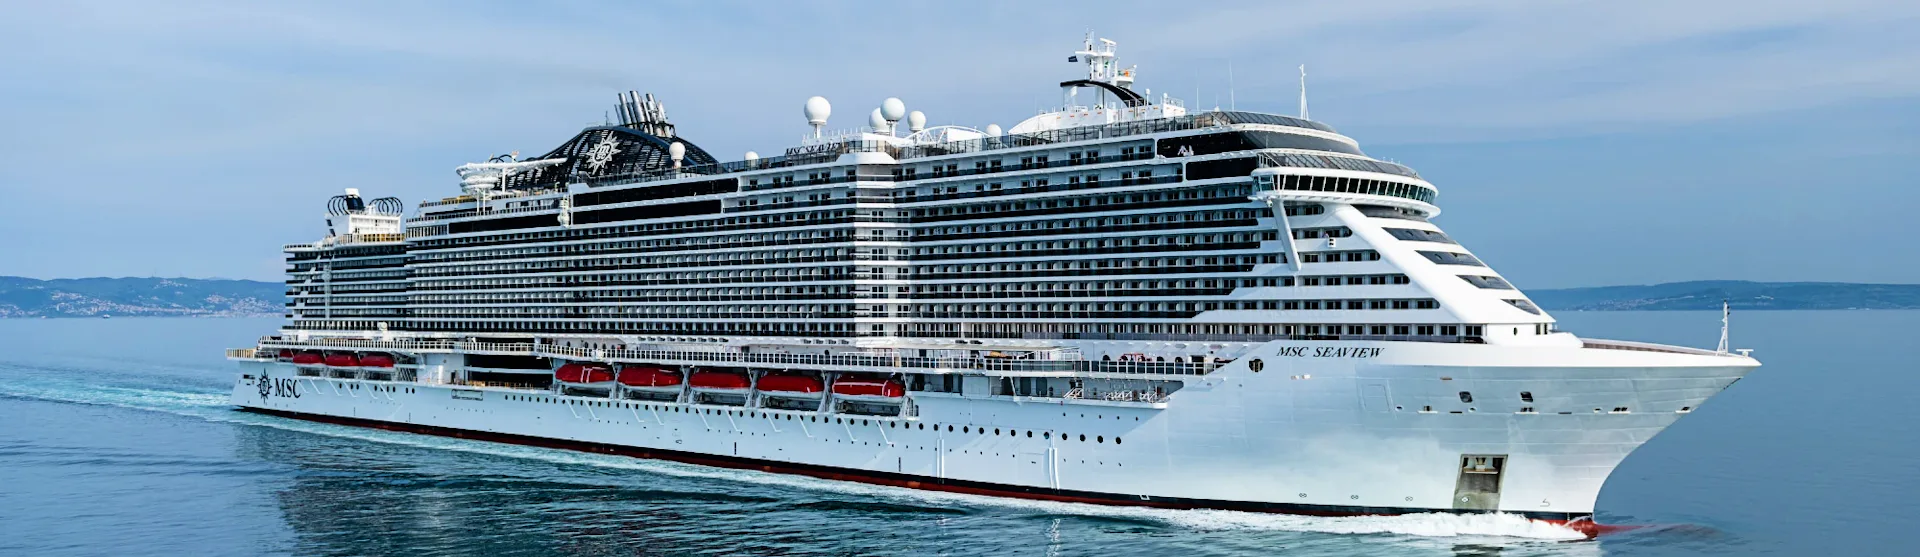 MSC Seaview - MSC Cruises